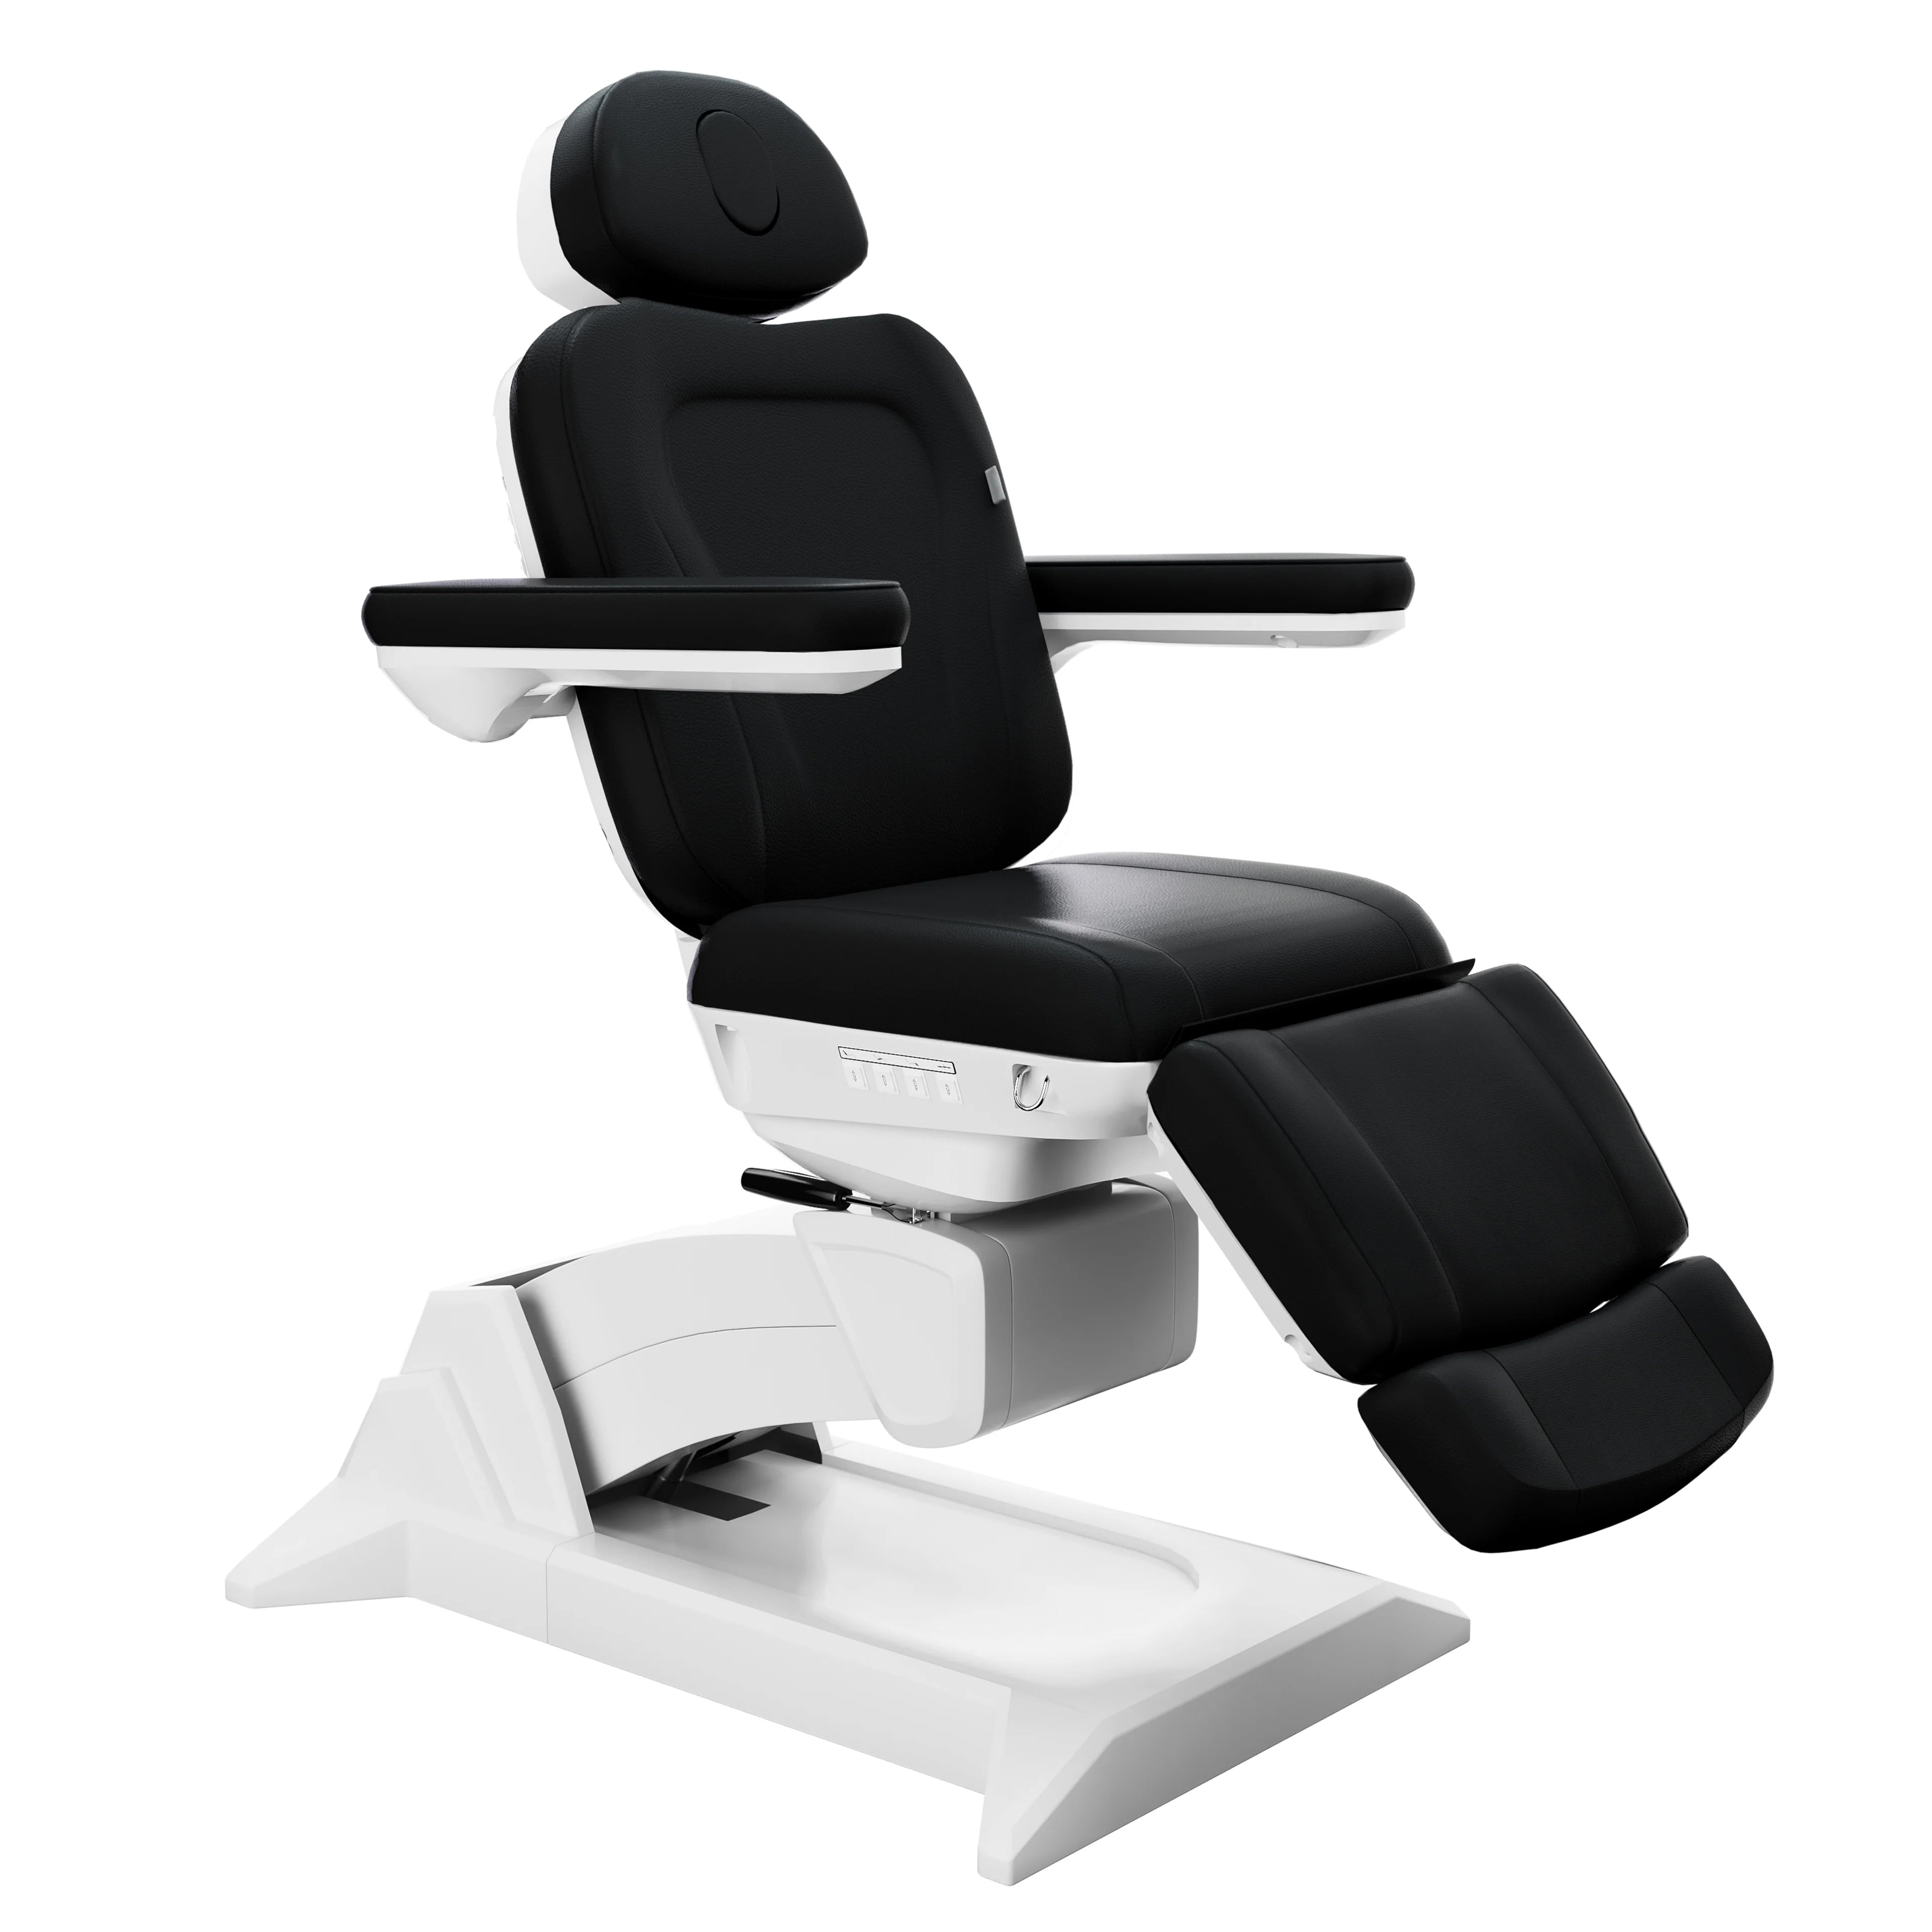 SpaMarc . Ultera . Rotating . 4 Motor Spa Treatment Chair/Bed